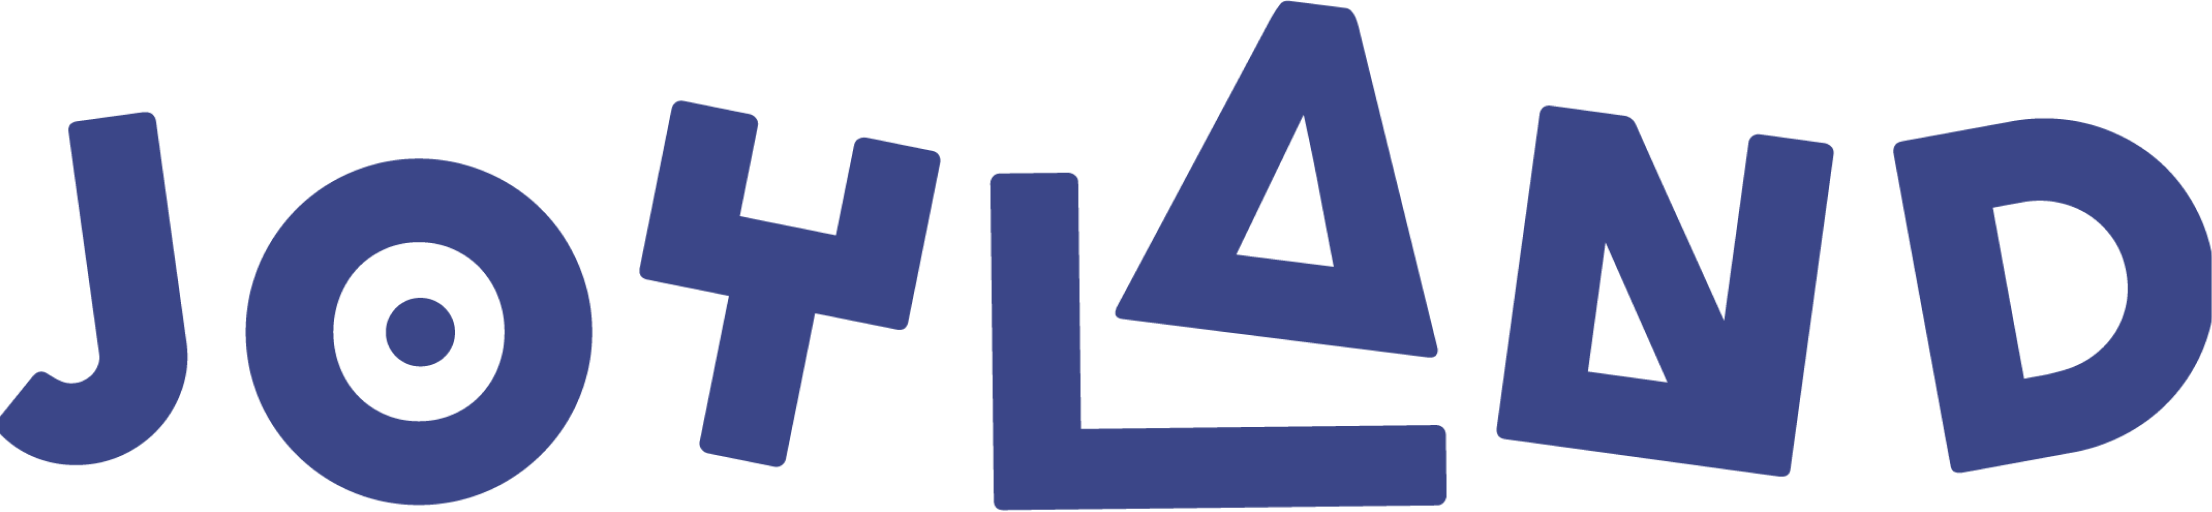 joyland logo